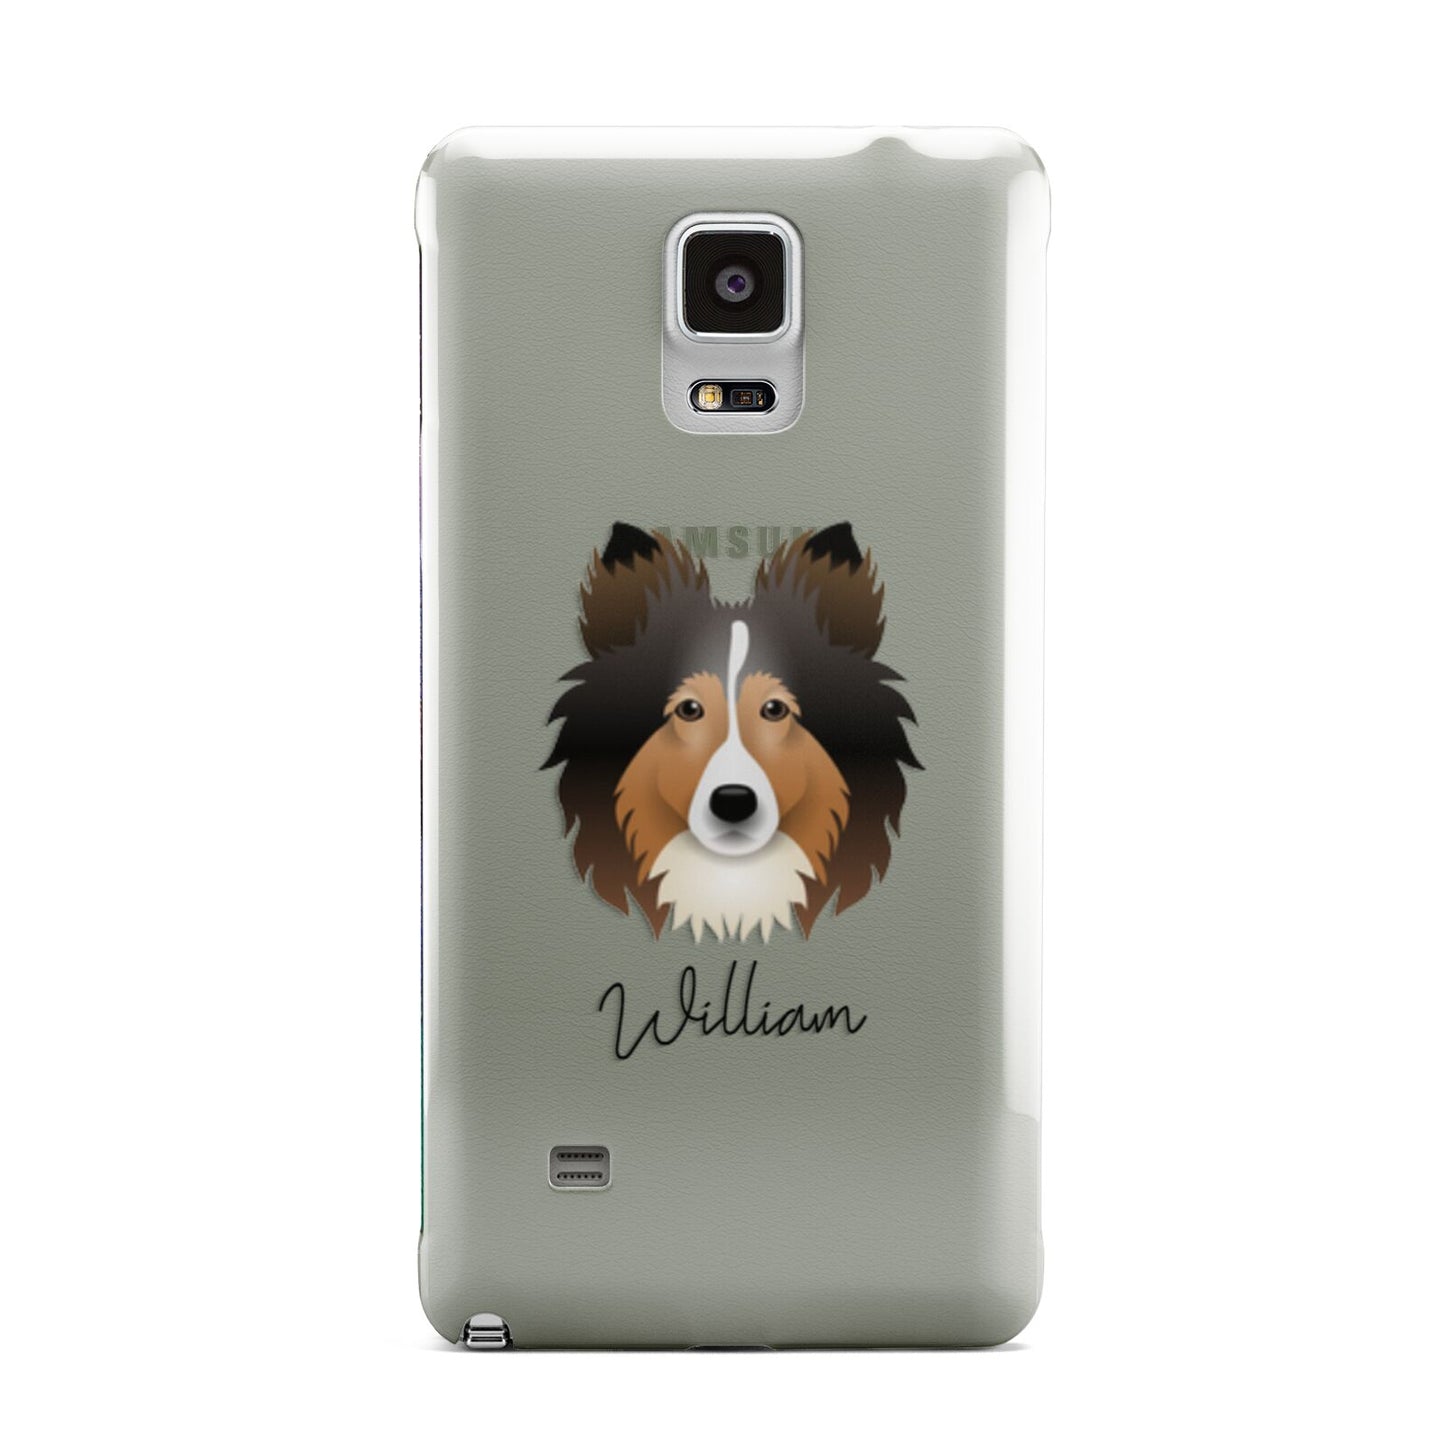 Shetland Sheepdog Personalised Samsung Galaxy Note 4 Case